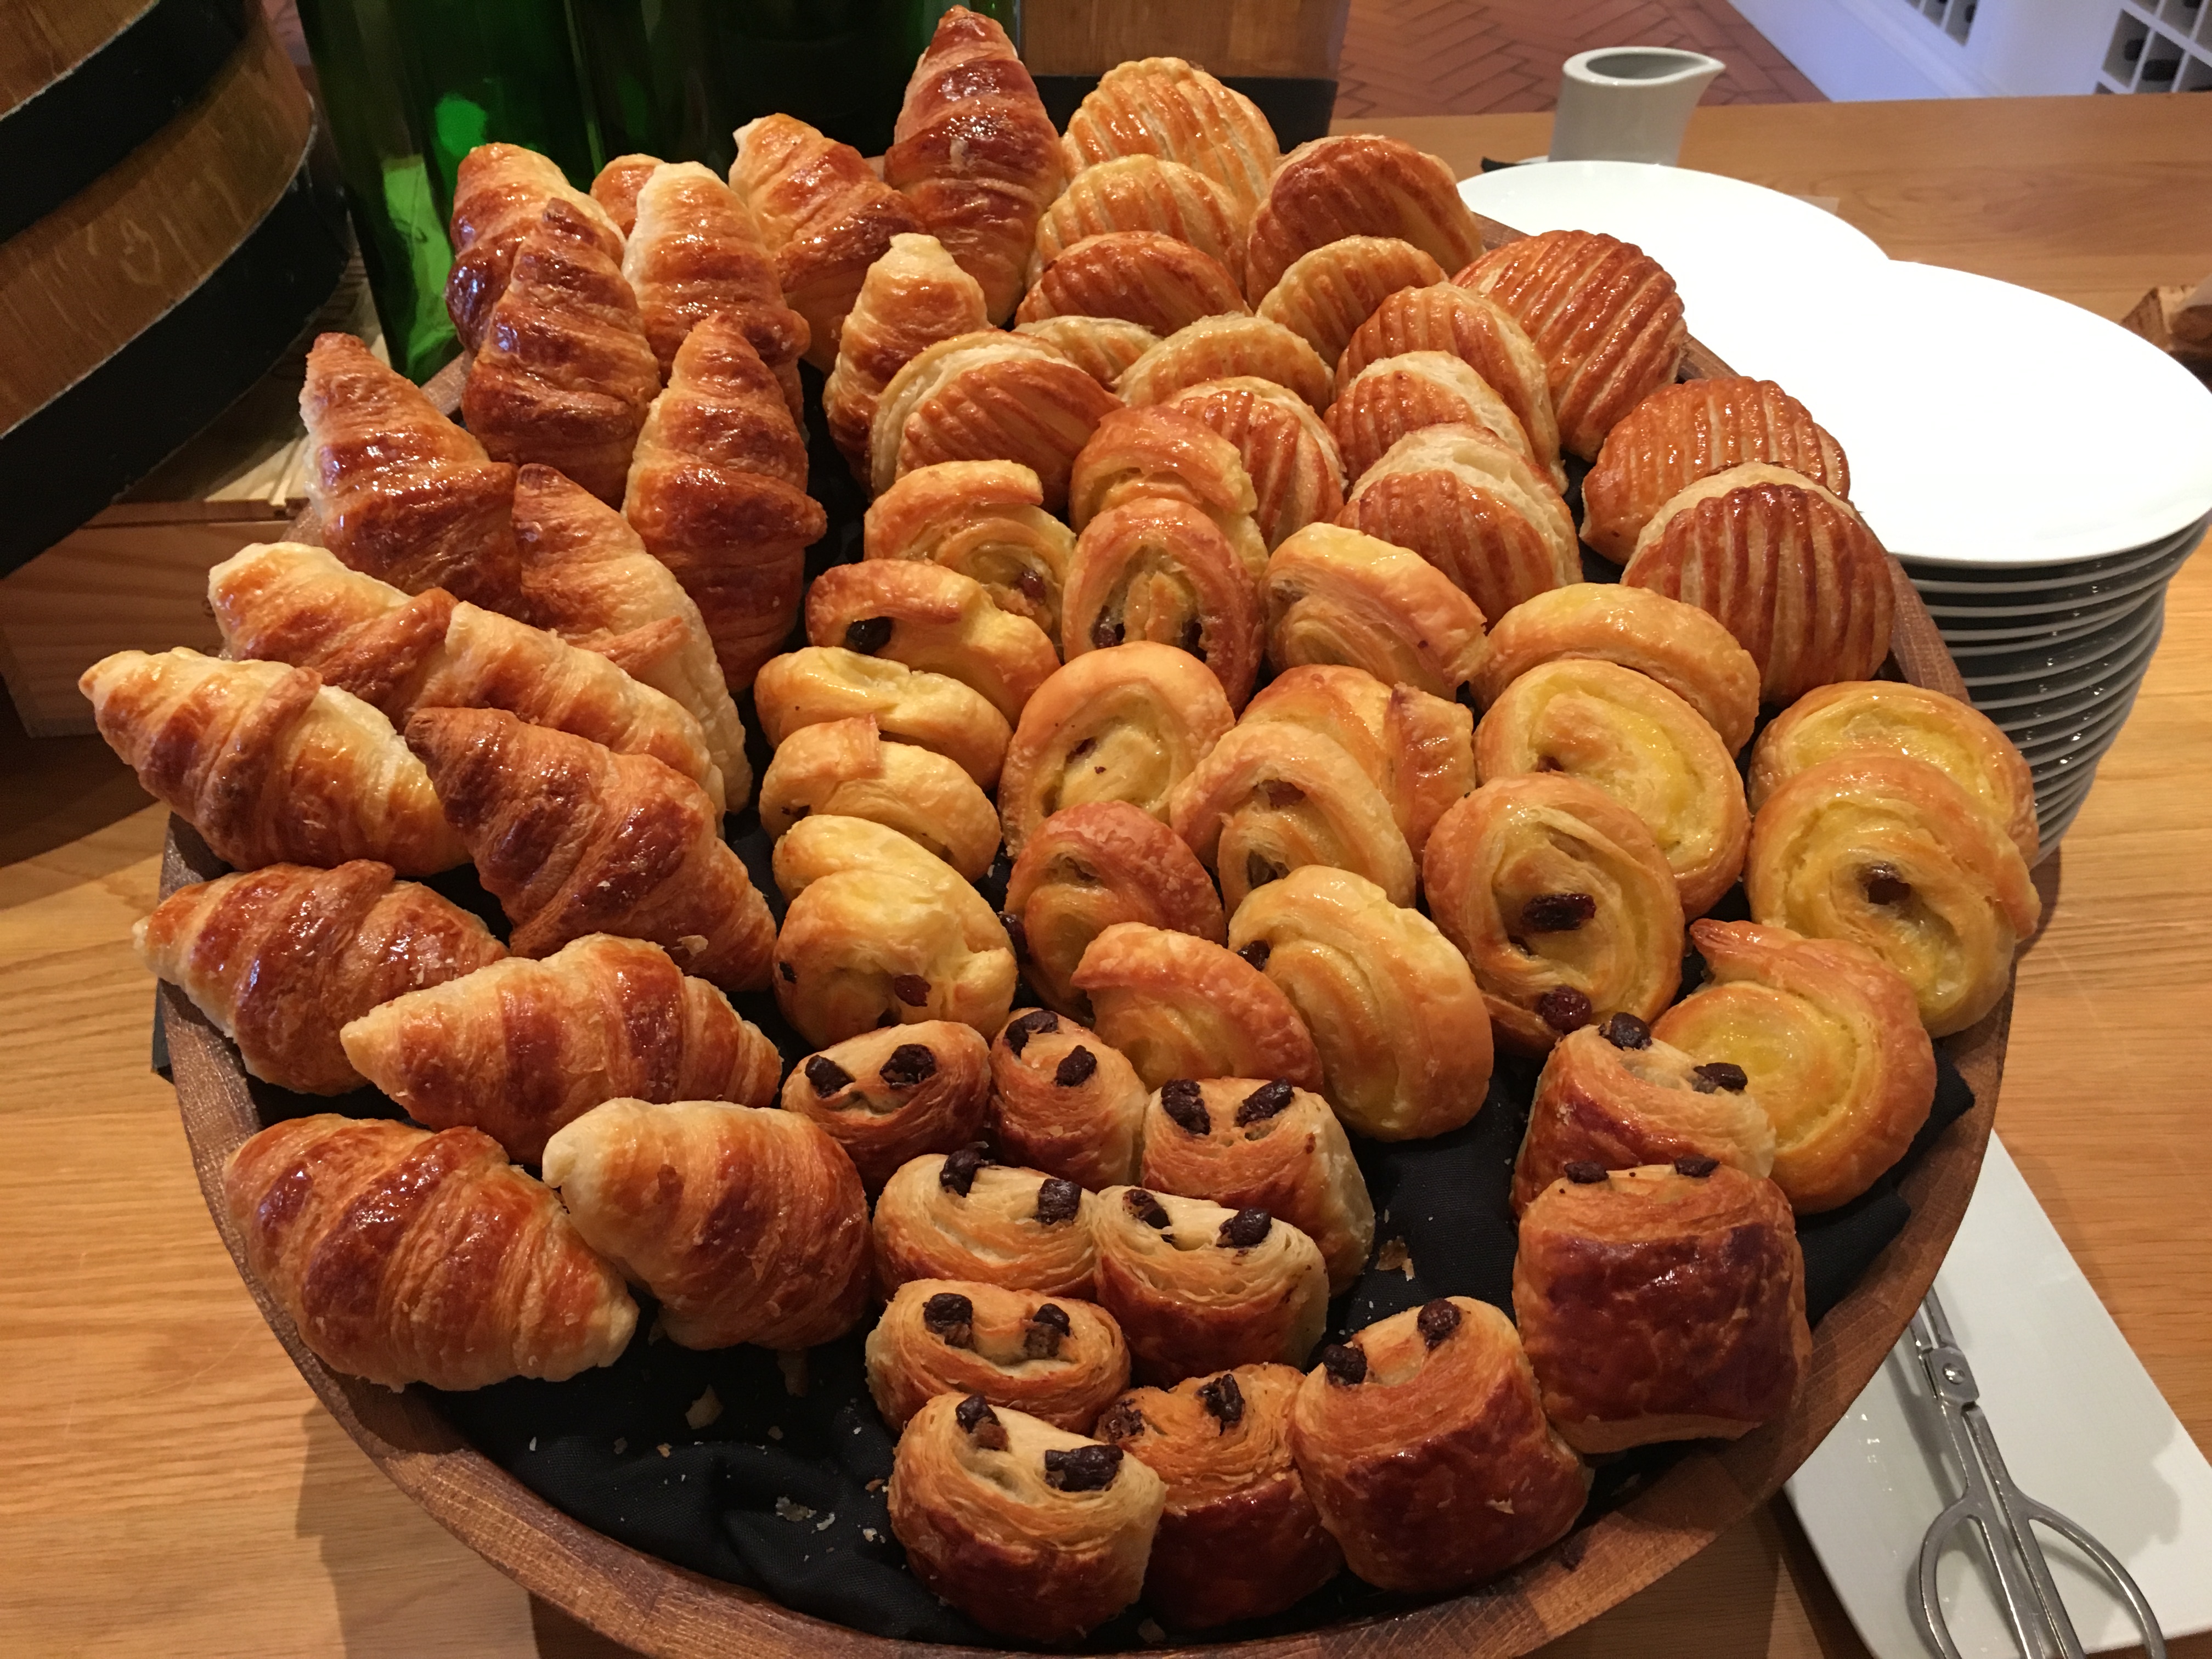 More Baked Goods at Yeatman Hotel Breakfast Buffet